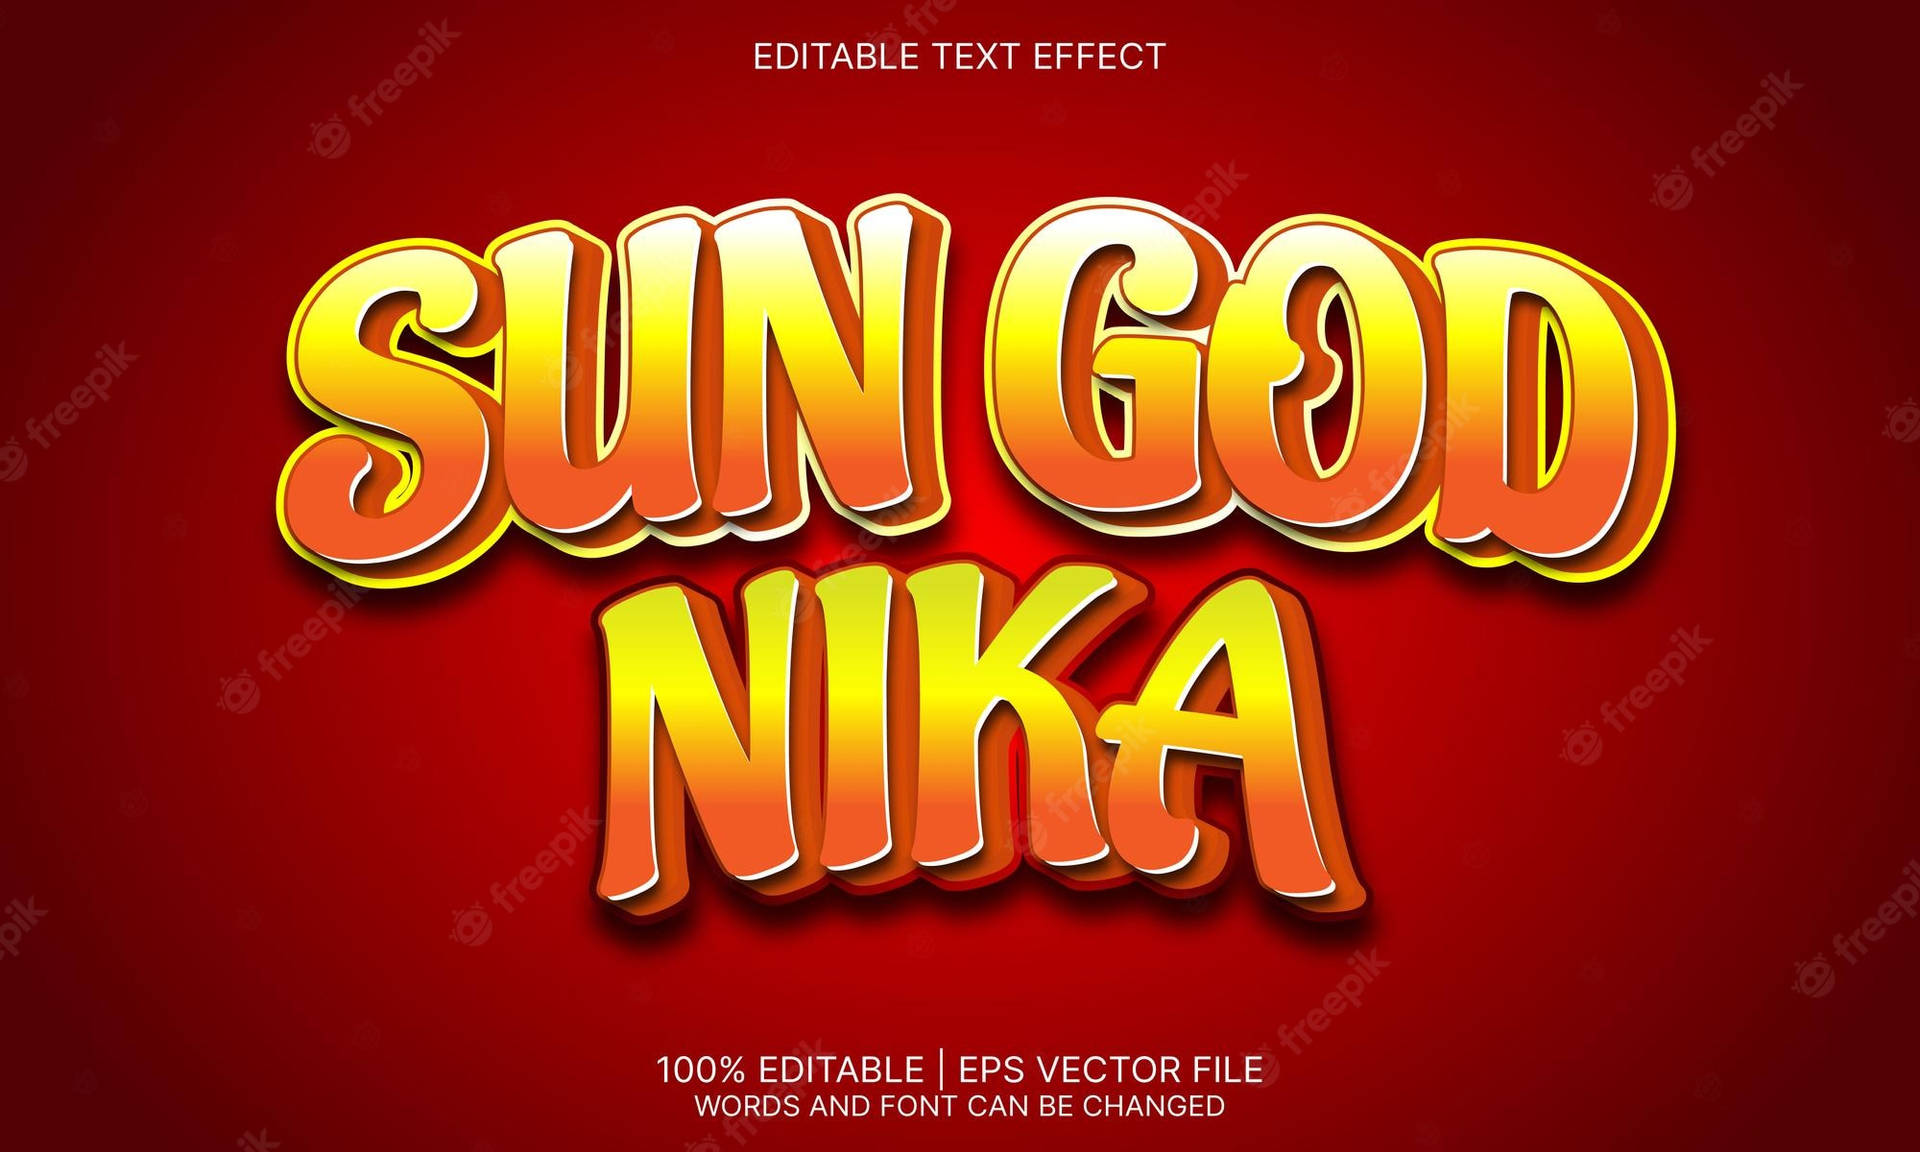 "Behold the sun god, Nika." Wallpaper